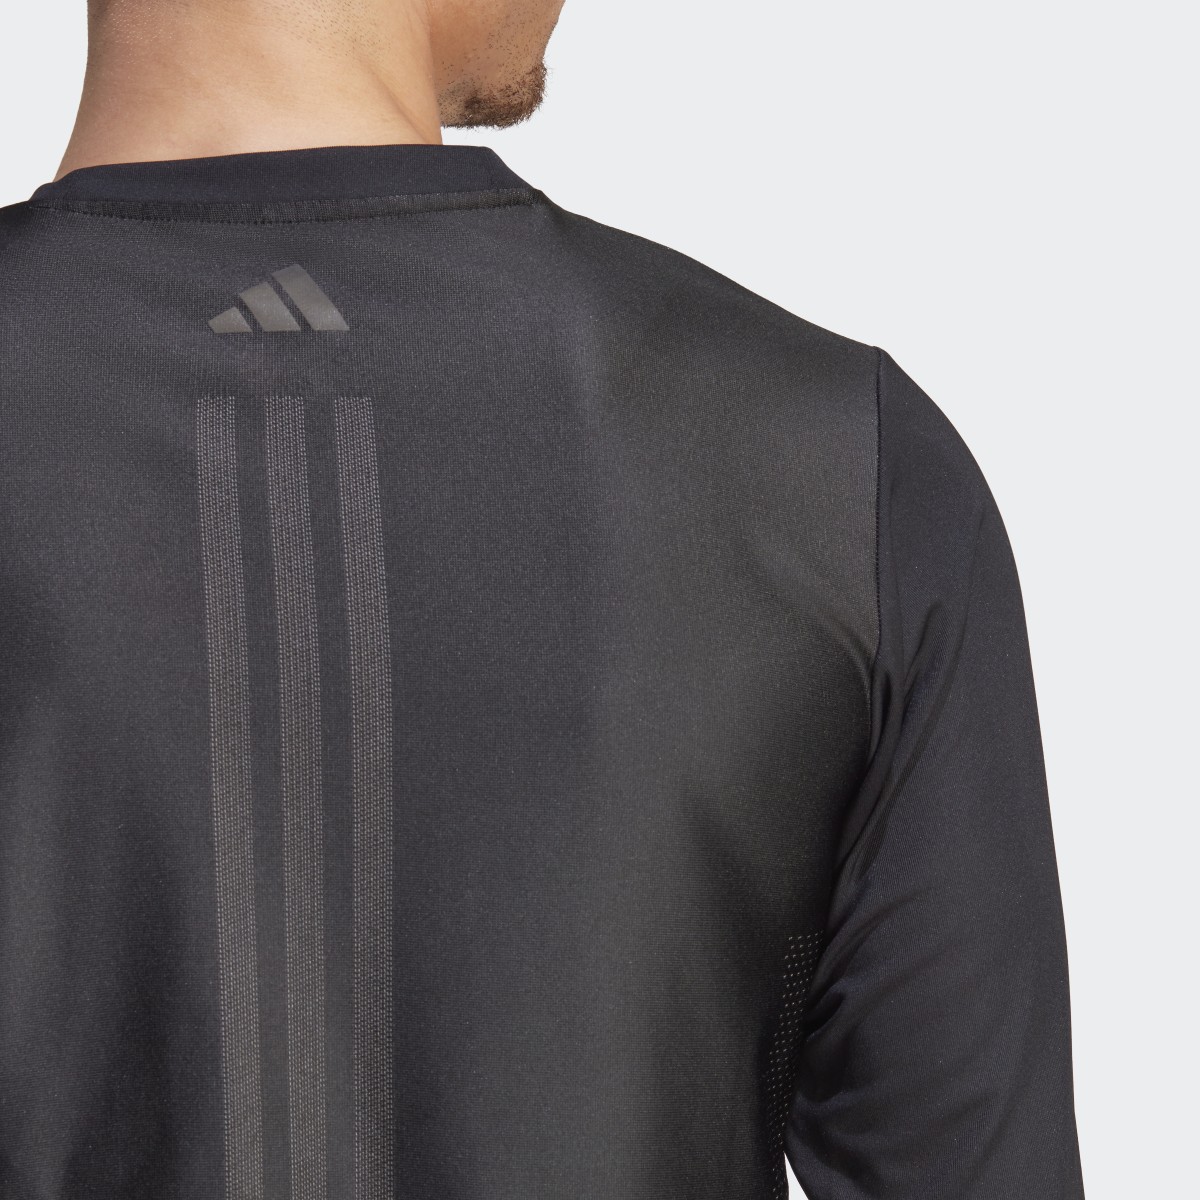 Adidas HIIT Vis-Tech Training Long-Sleeve Top. 9